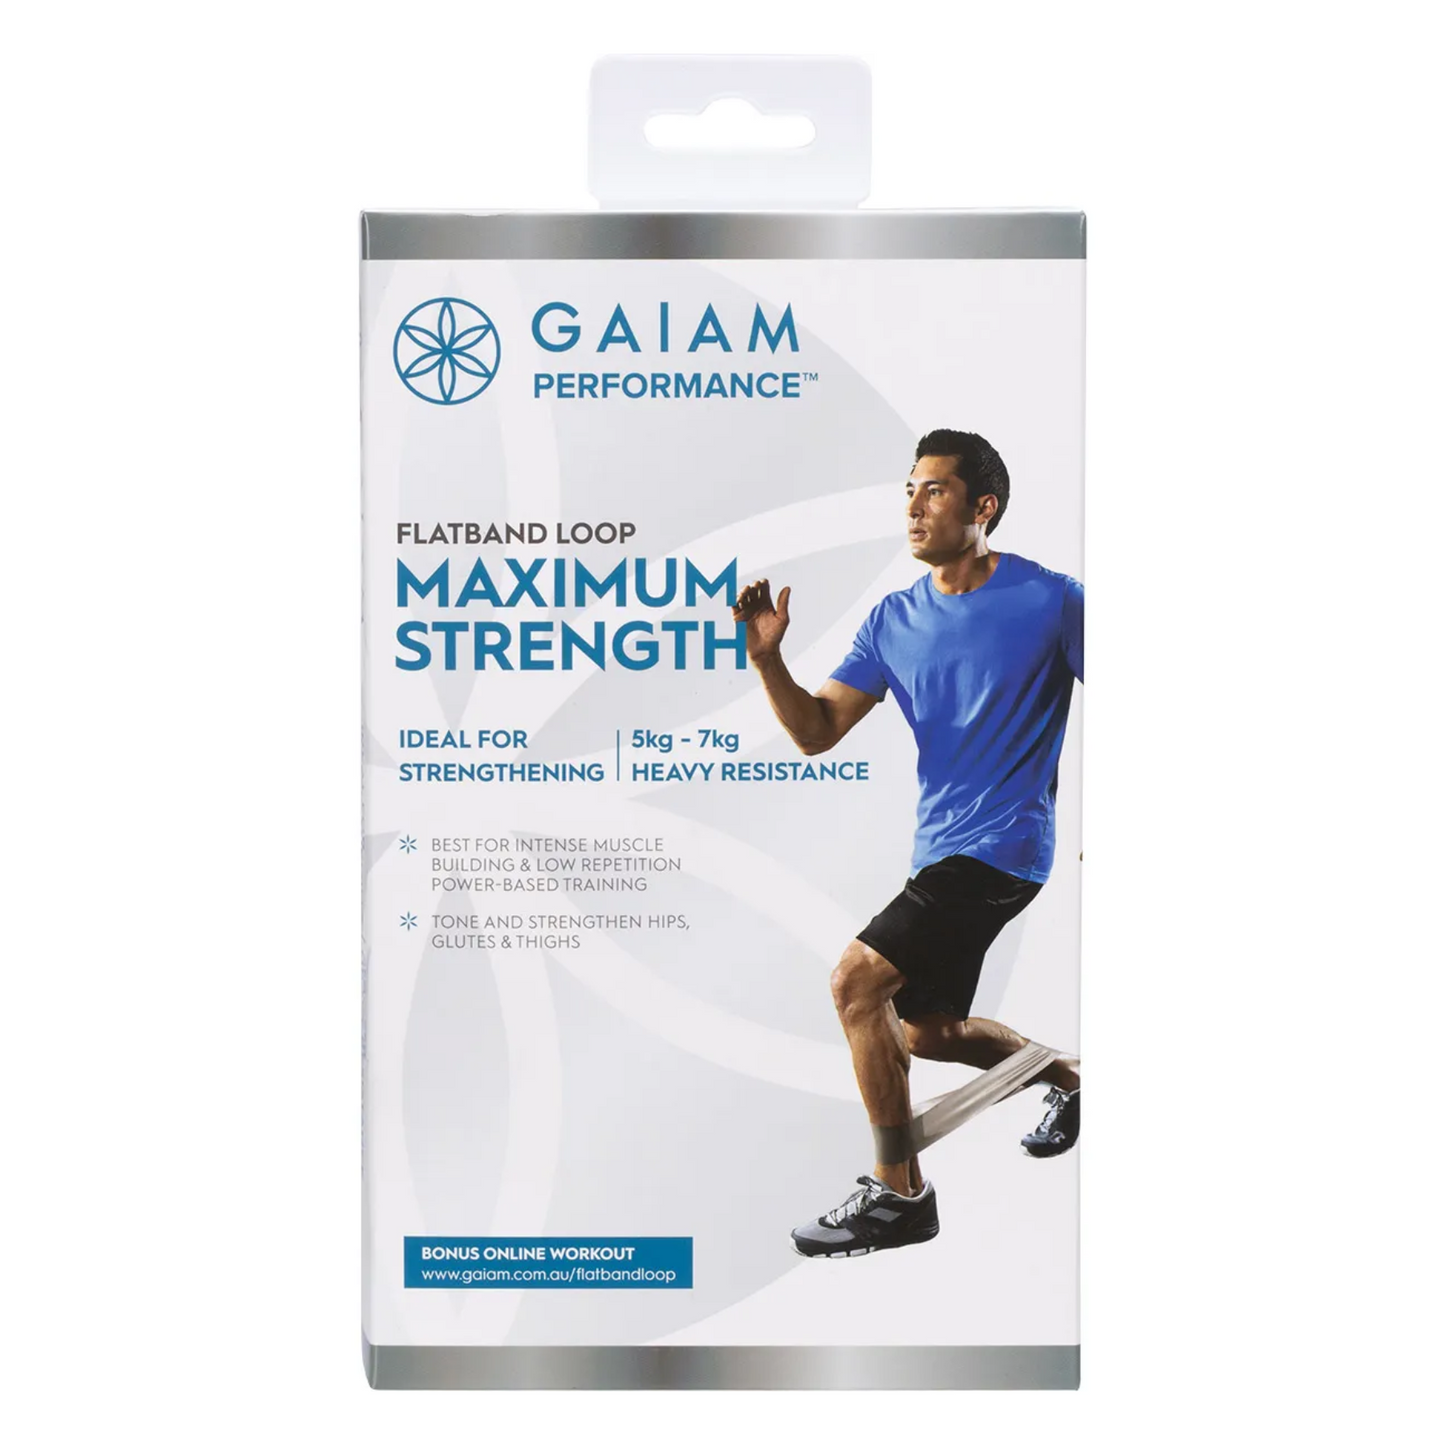 Gaiam Performance Flat Band Loop Maximum Strength, Heavy Resistance